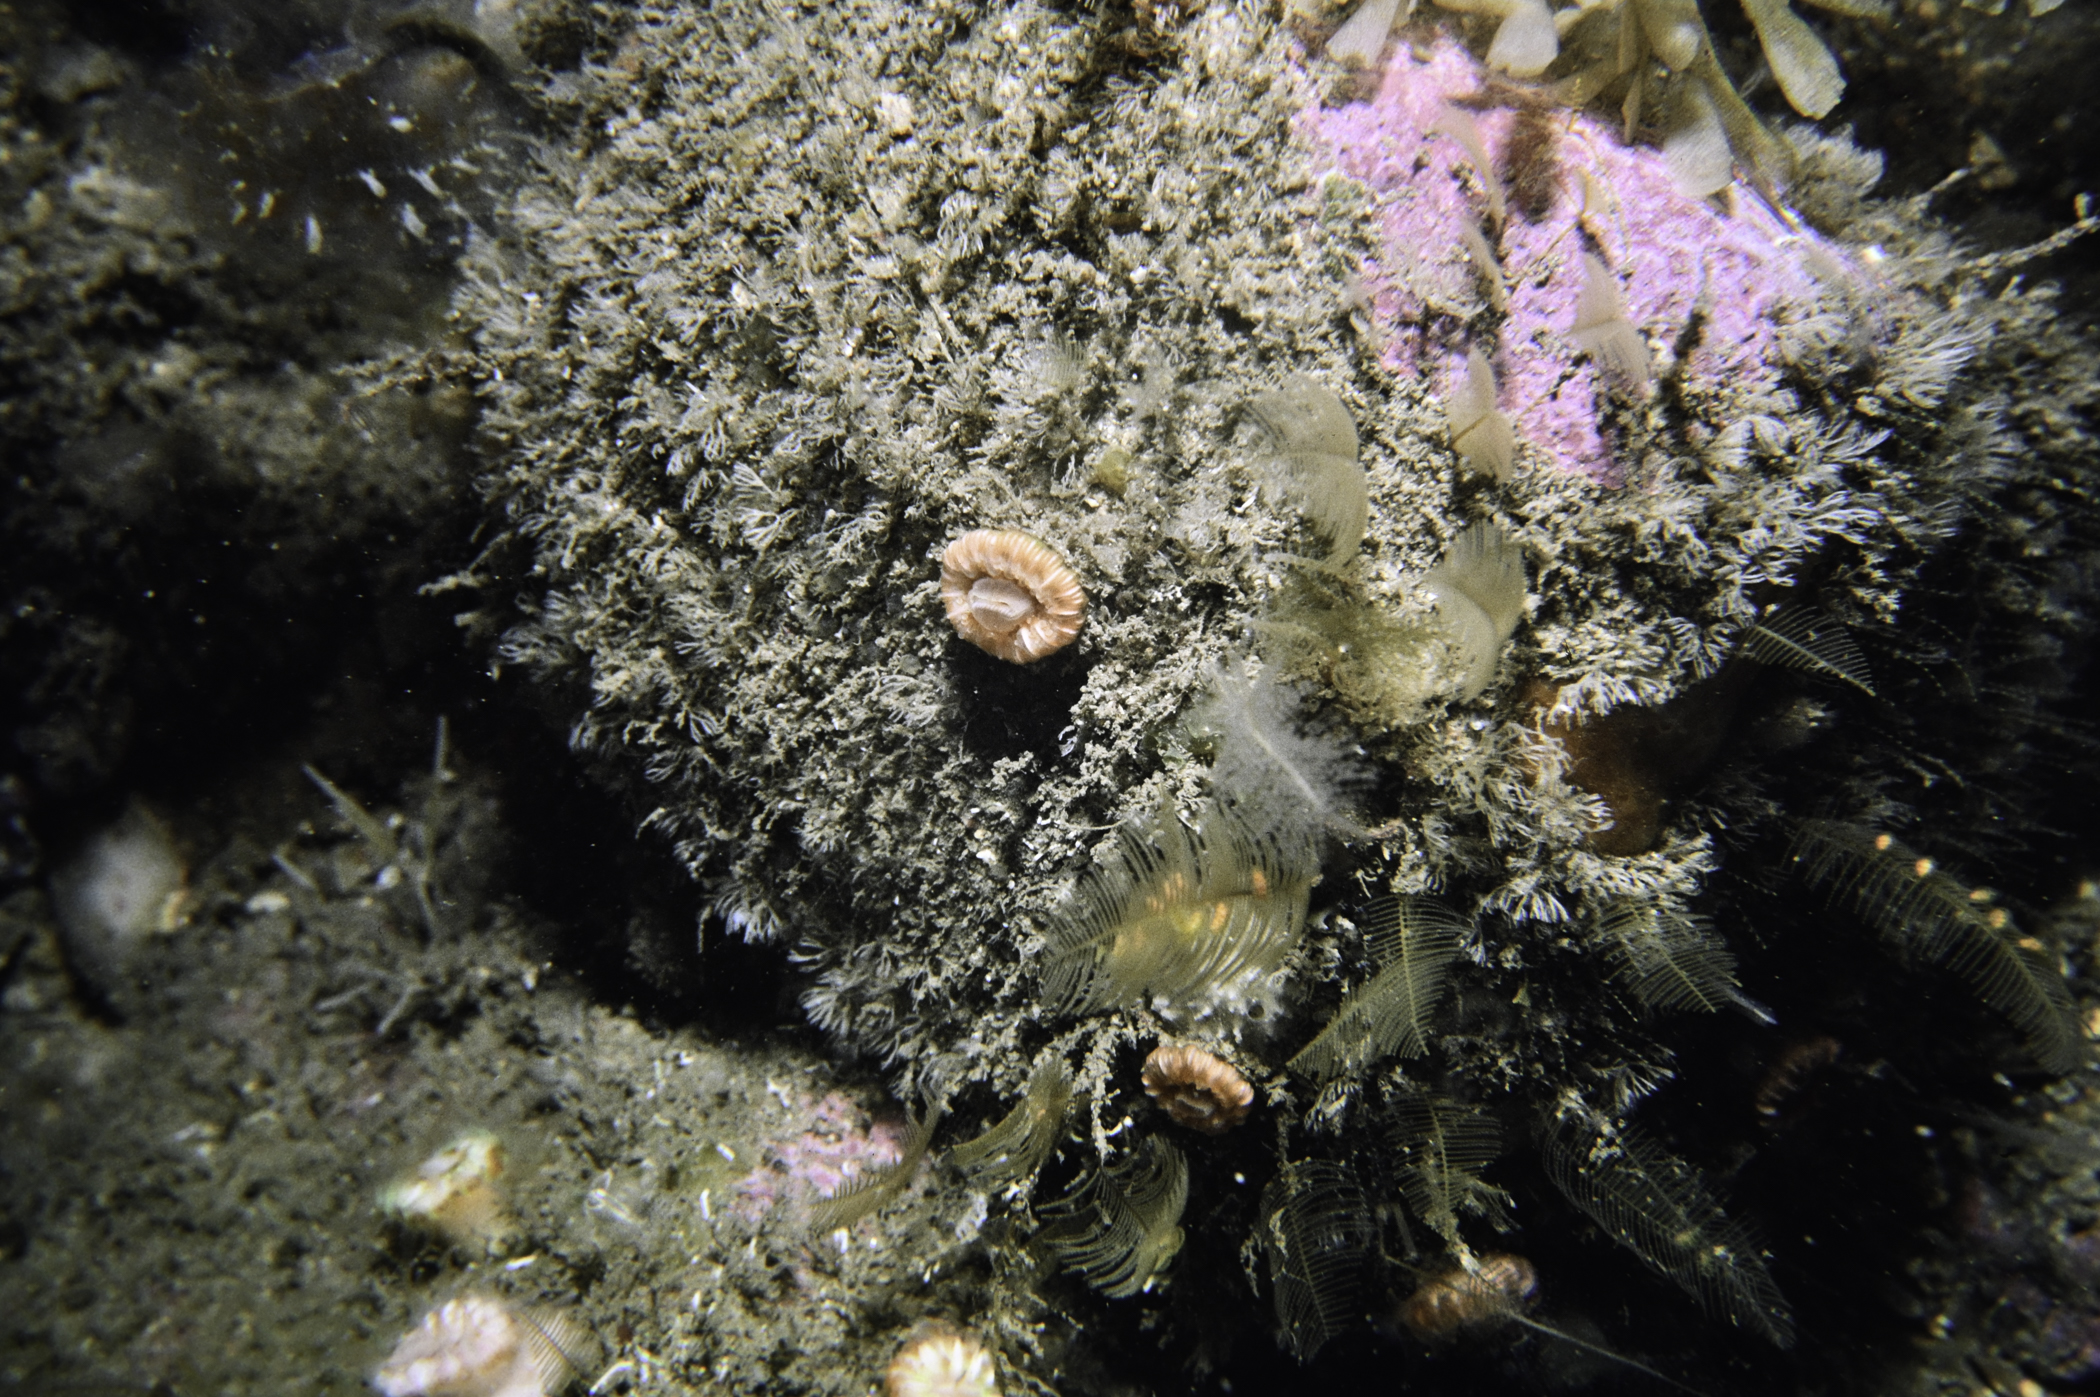 Caryophyllia smithii, Aglaophenia tubulifera, Antennella secundaria. Site: Drumnakill Point, Murlough Bay. 